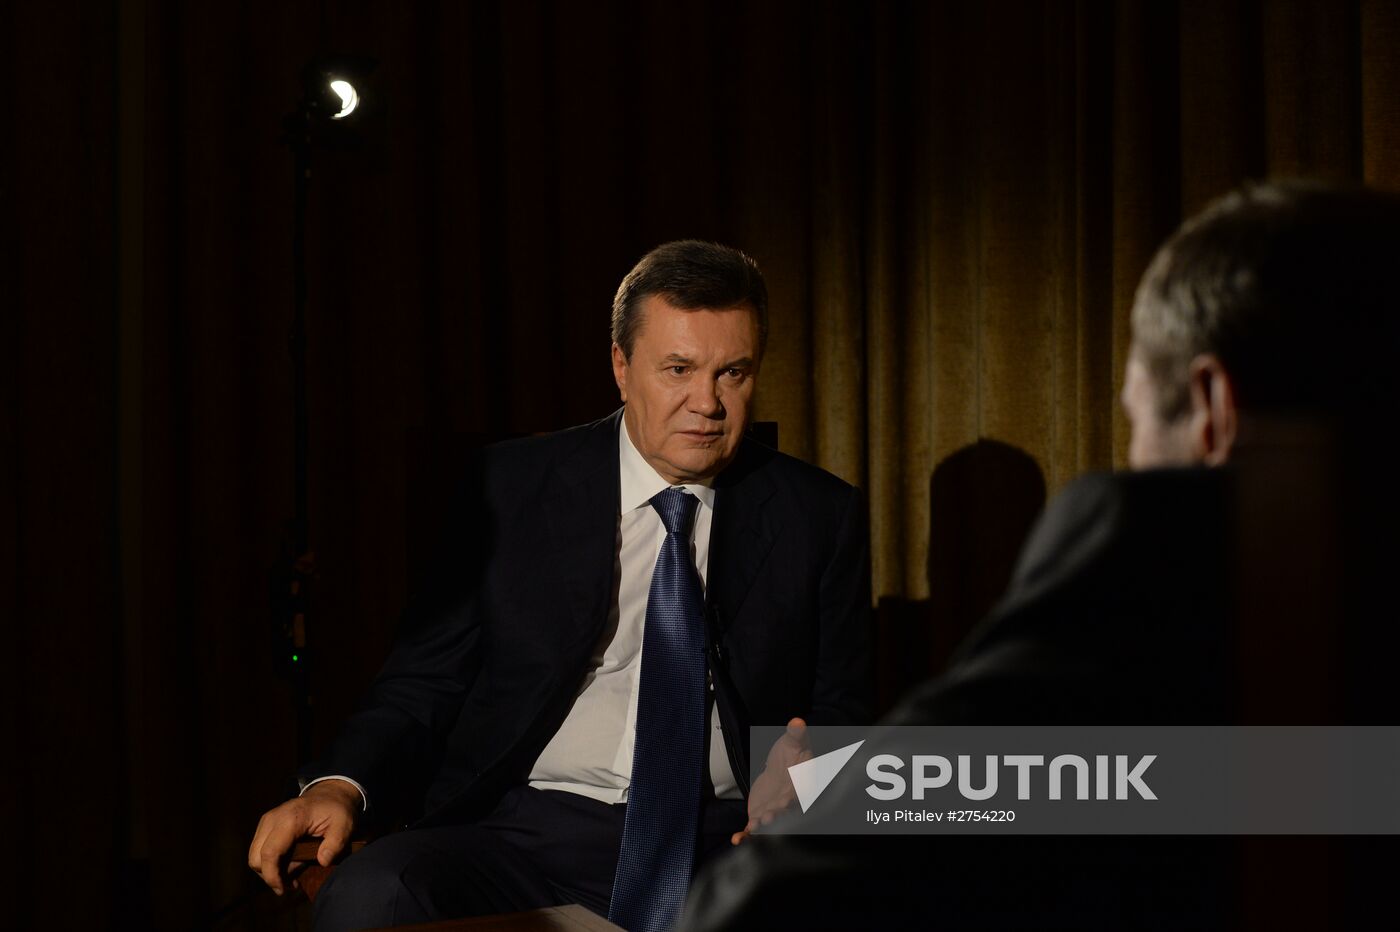 Former Ukrainian President Viktor Yanukovych interviewed by RIA Novosti